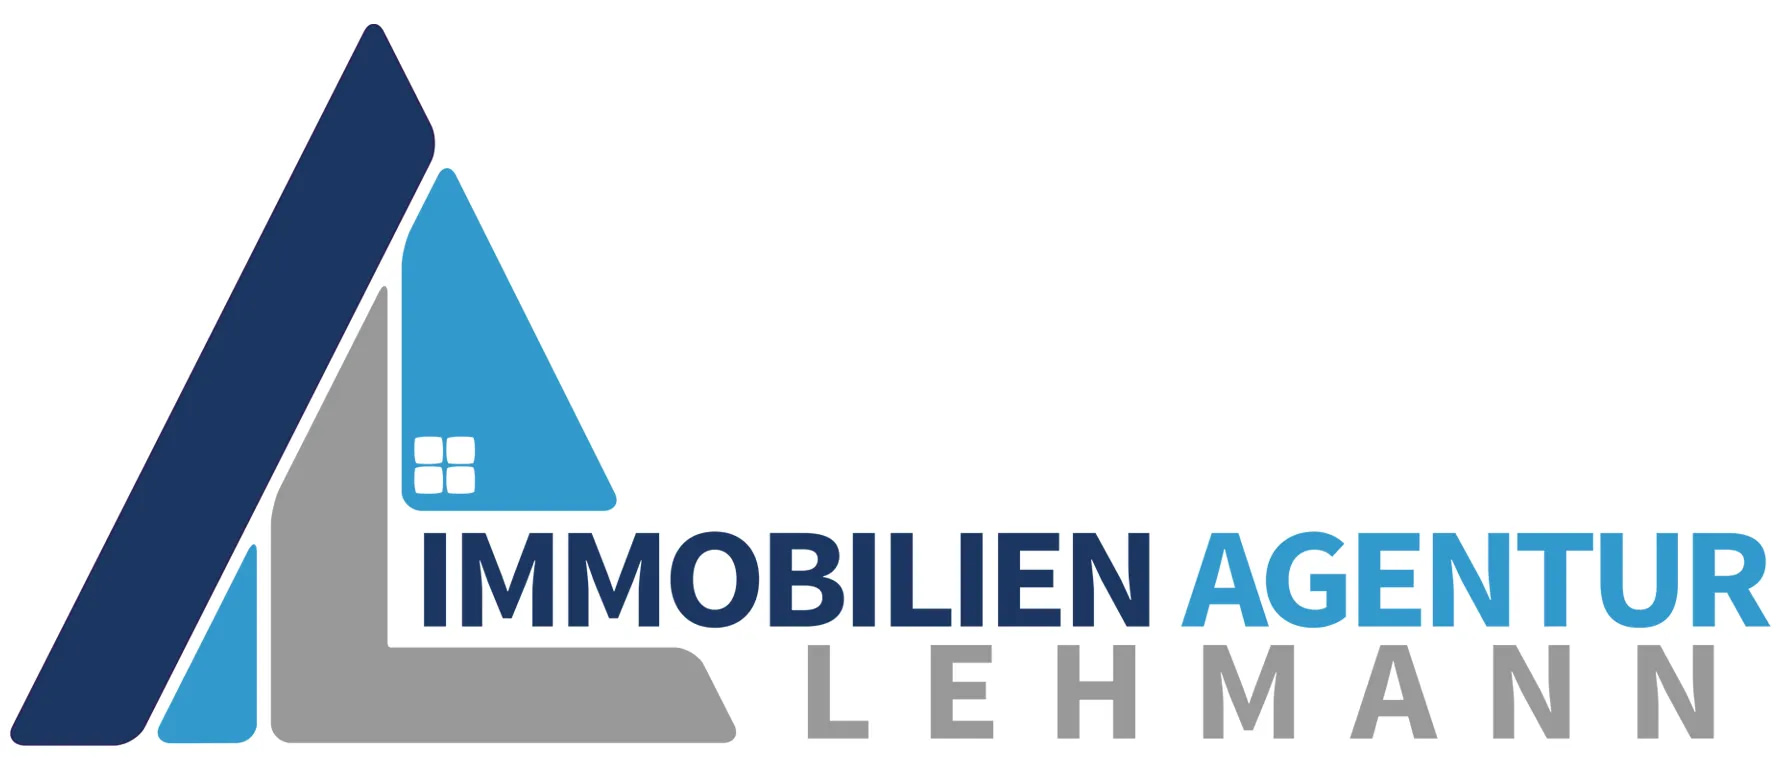 Immobilienagentur Lehmann Logo